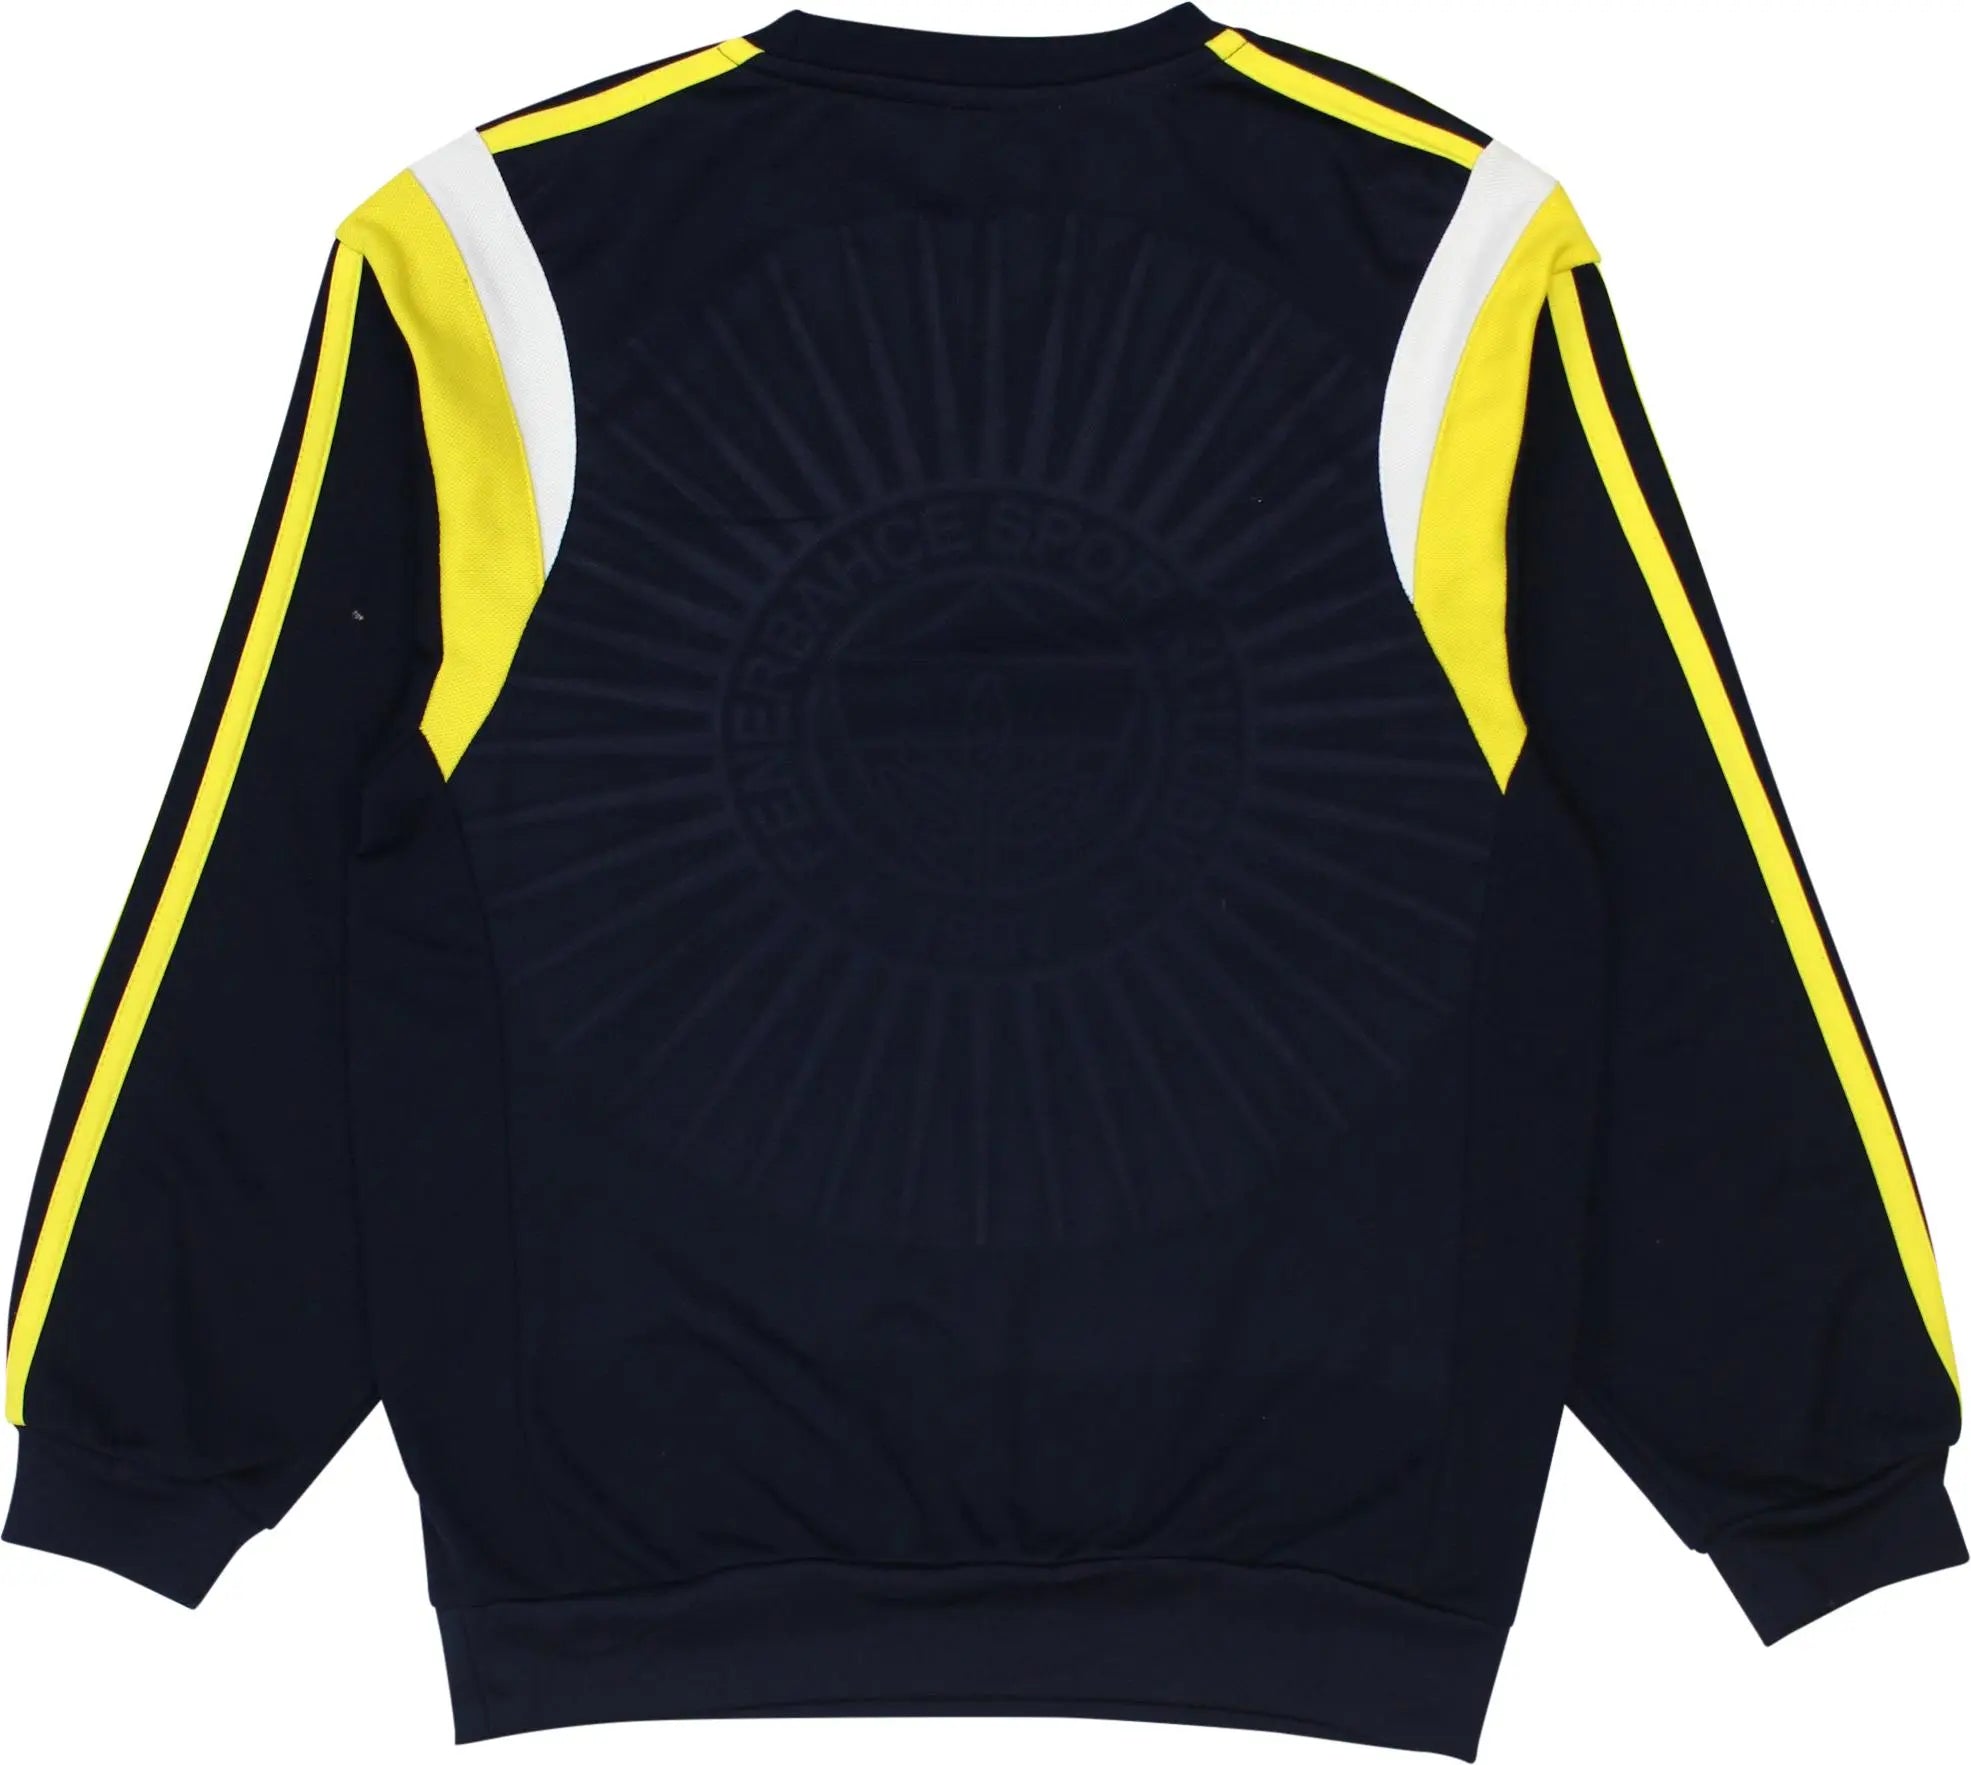 Adidas - 'Fenerbahçe Spor Kulübü 1907' Long Sleeve Top by Adidas- ThriftTale.com - Vintage and second handclothing